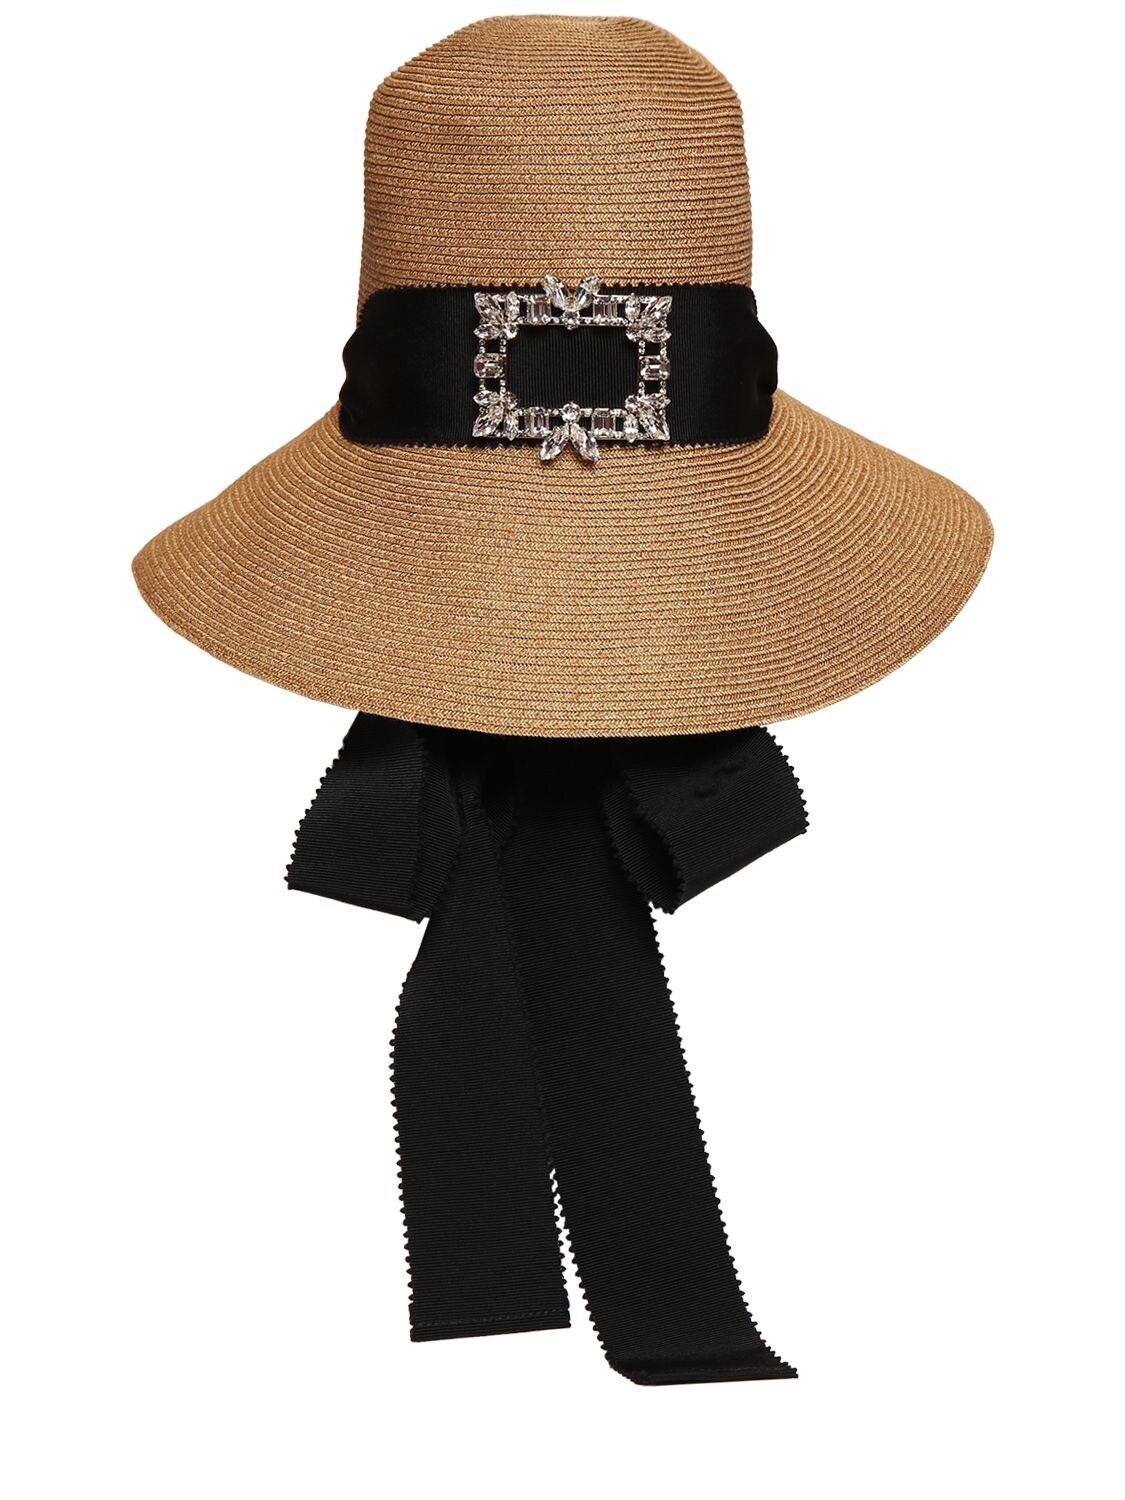 Roger Vivier Rv Brooch Straw Effect Brimmed Hat in Beige/Black 